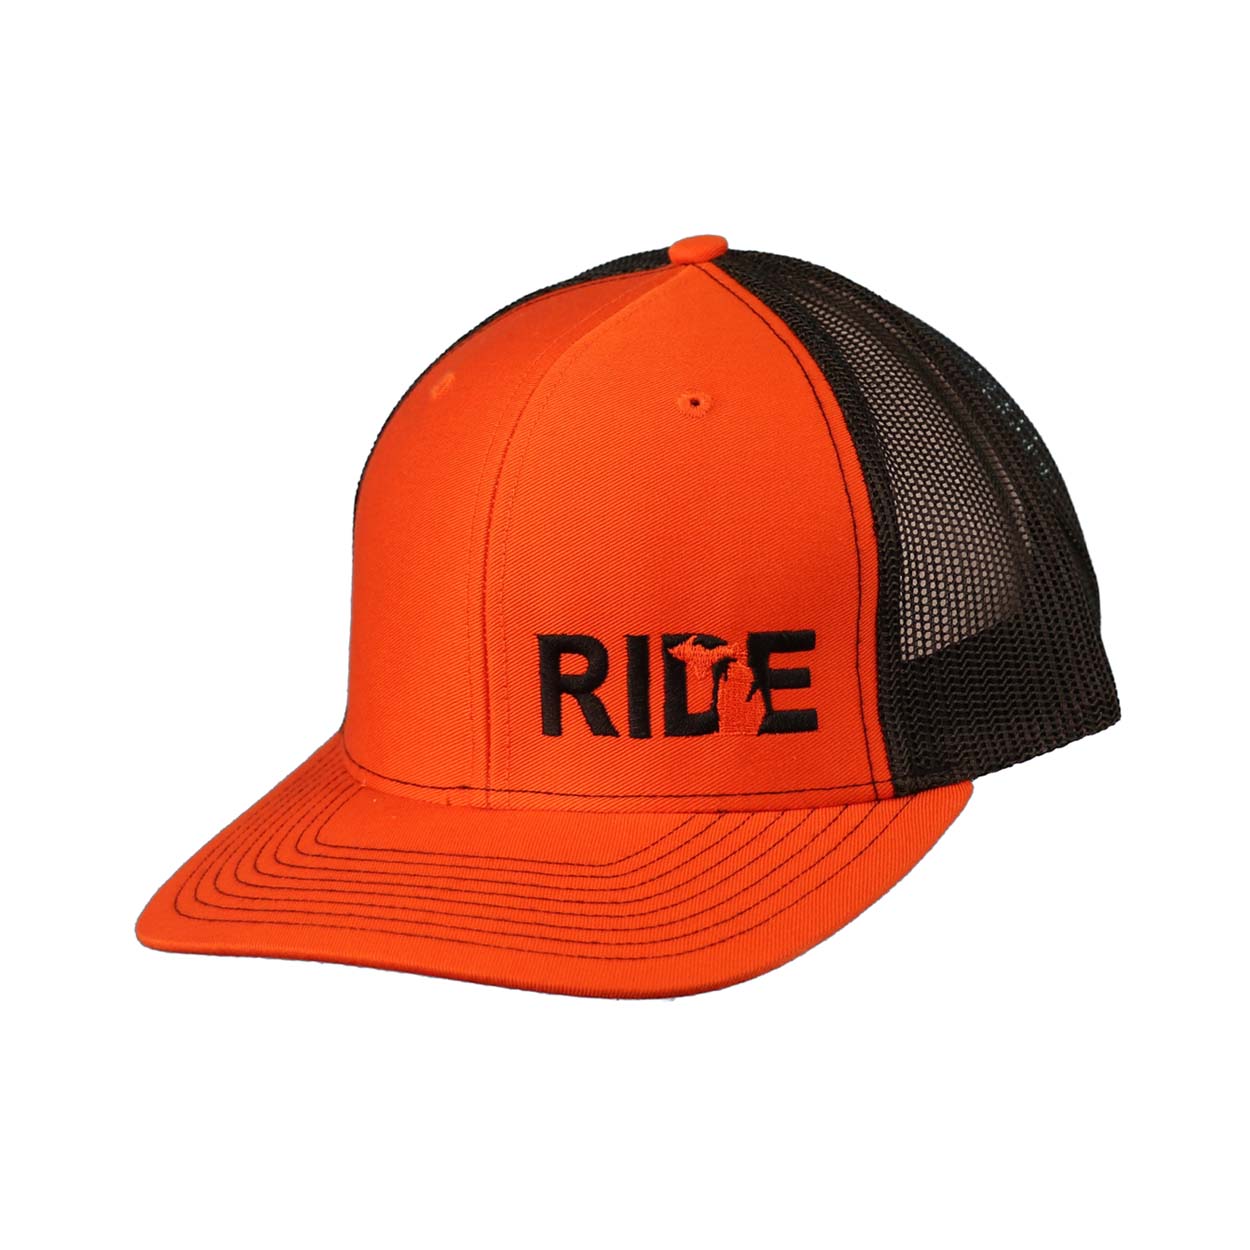 Ride Michigan Night Out Embroidered Snapback Trucker Hat Orange/Black